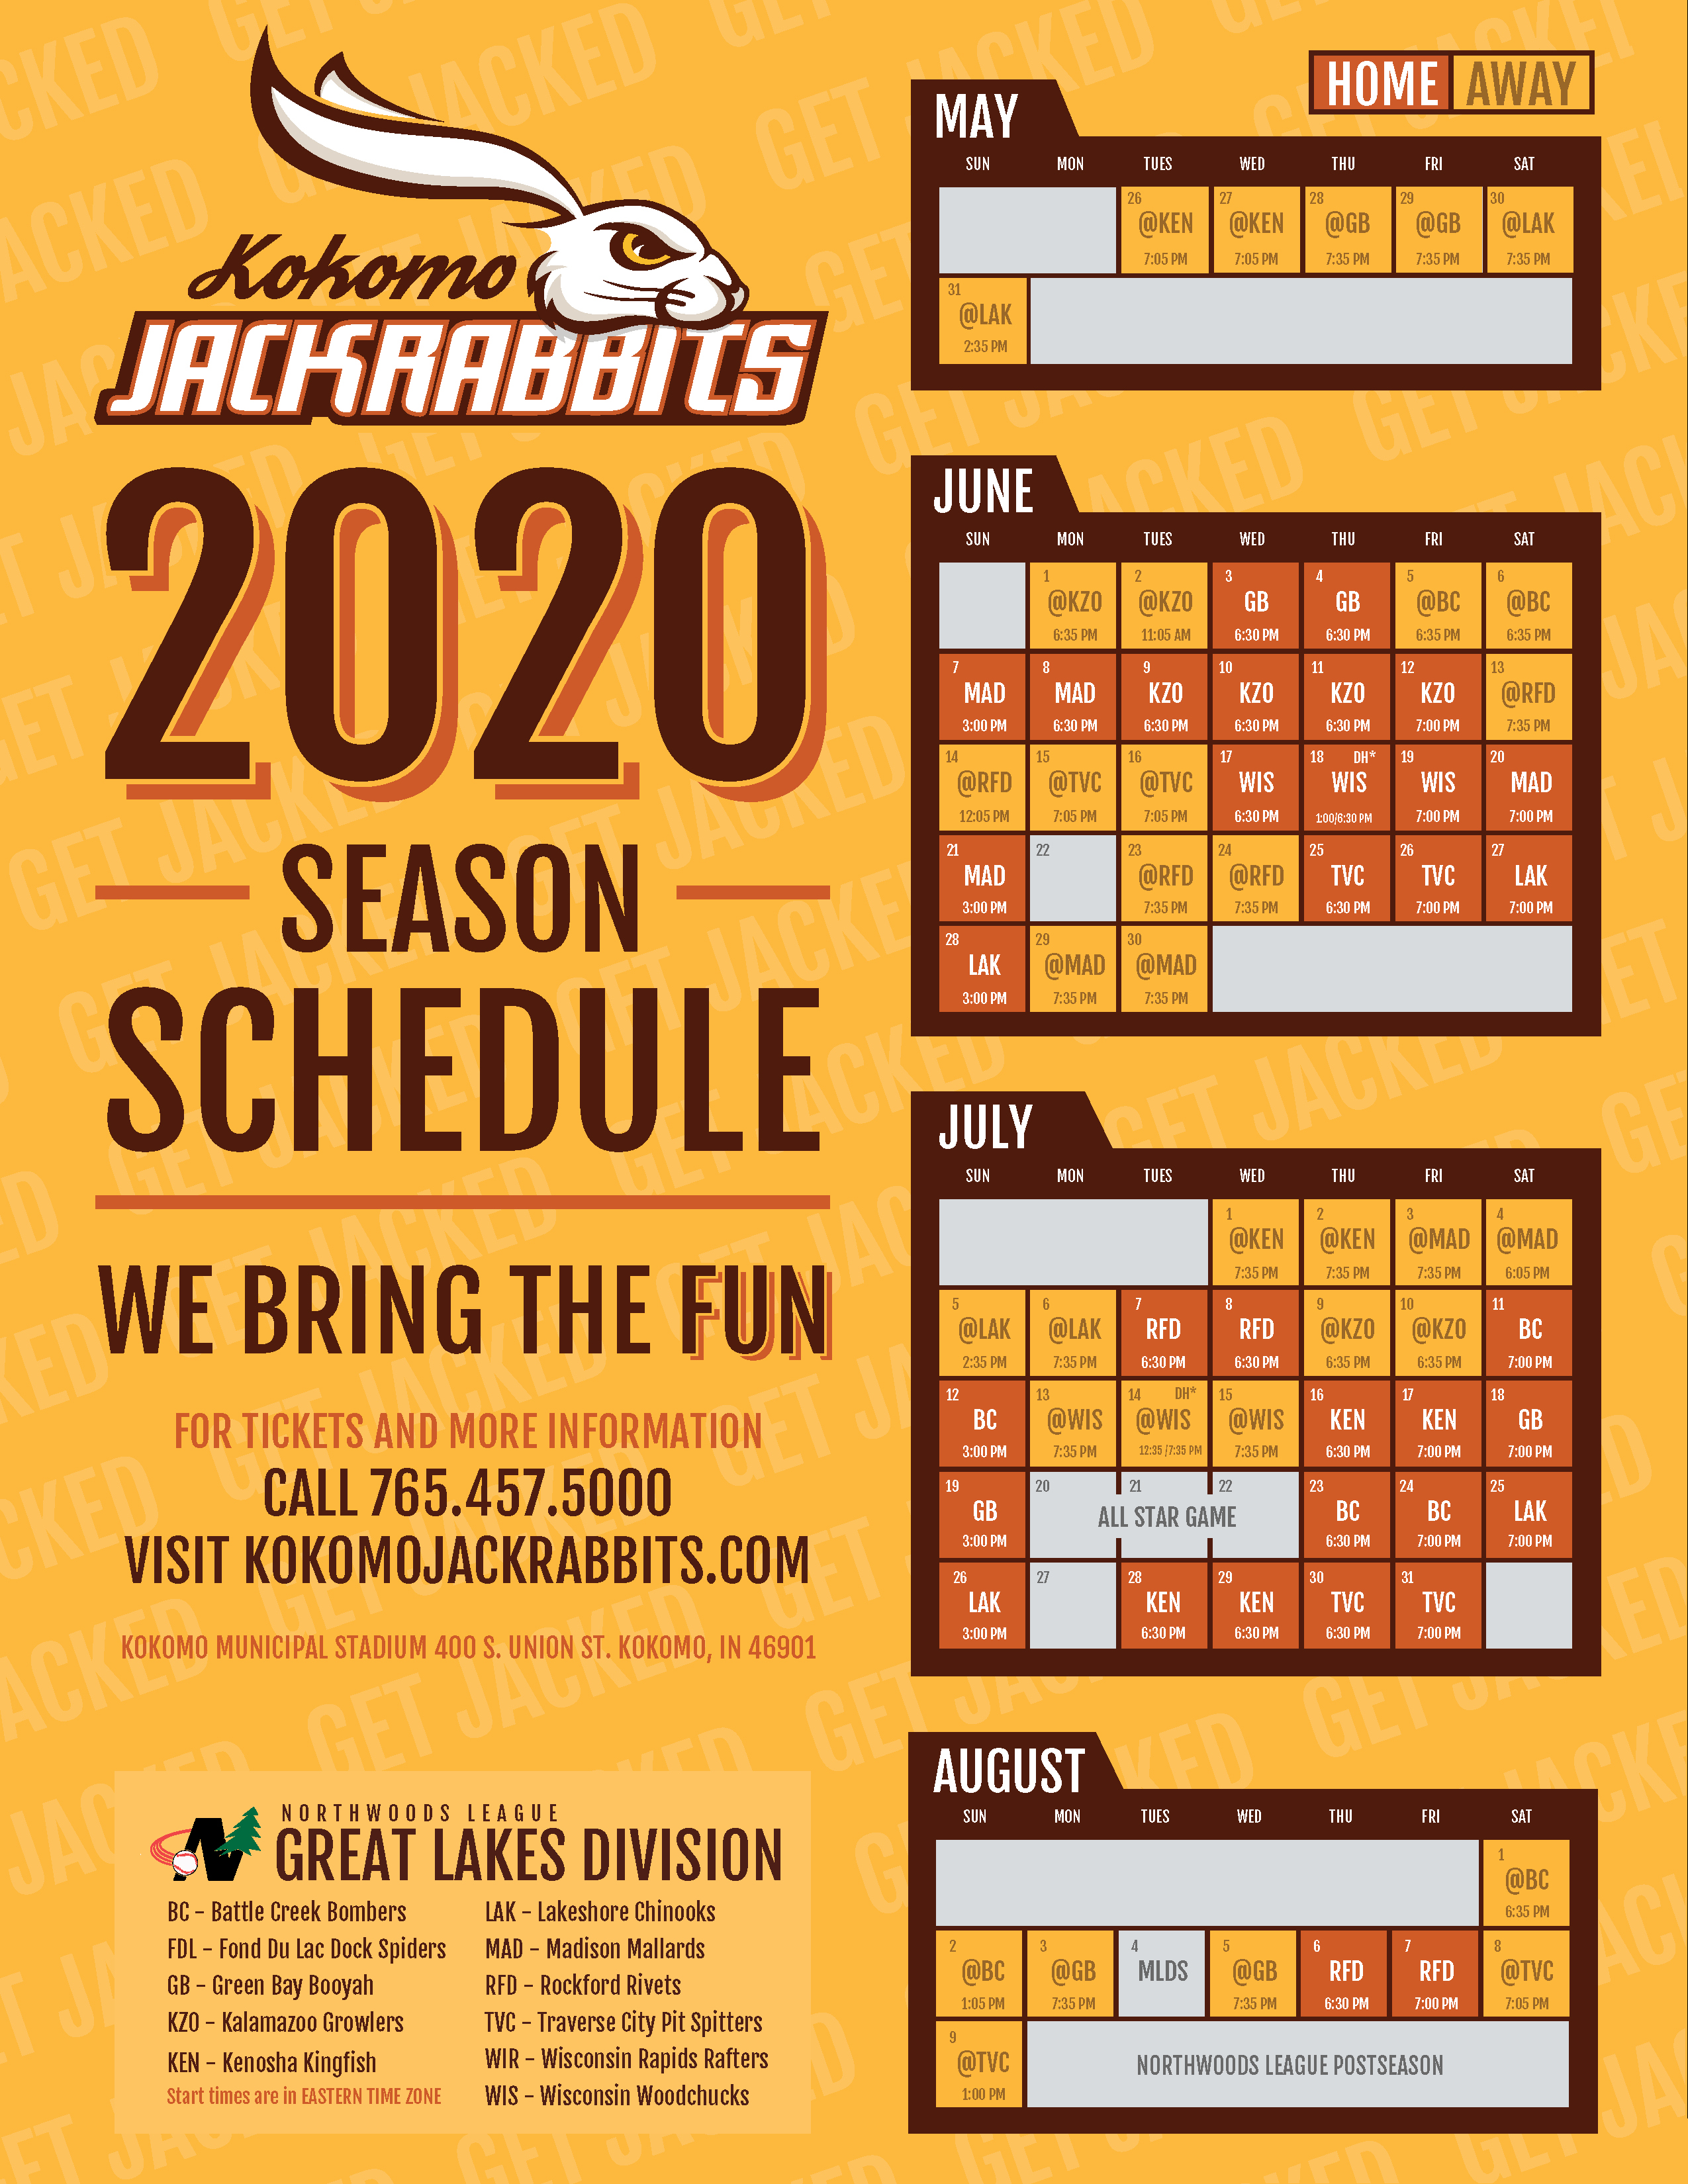 2020 Season Schedule